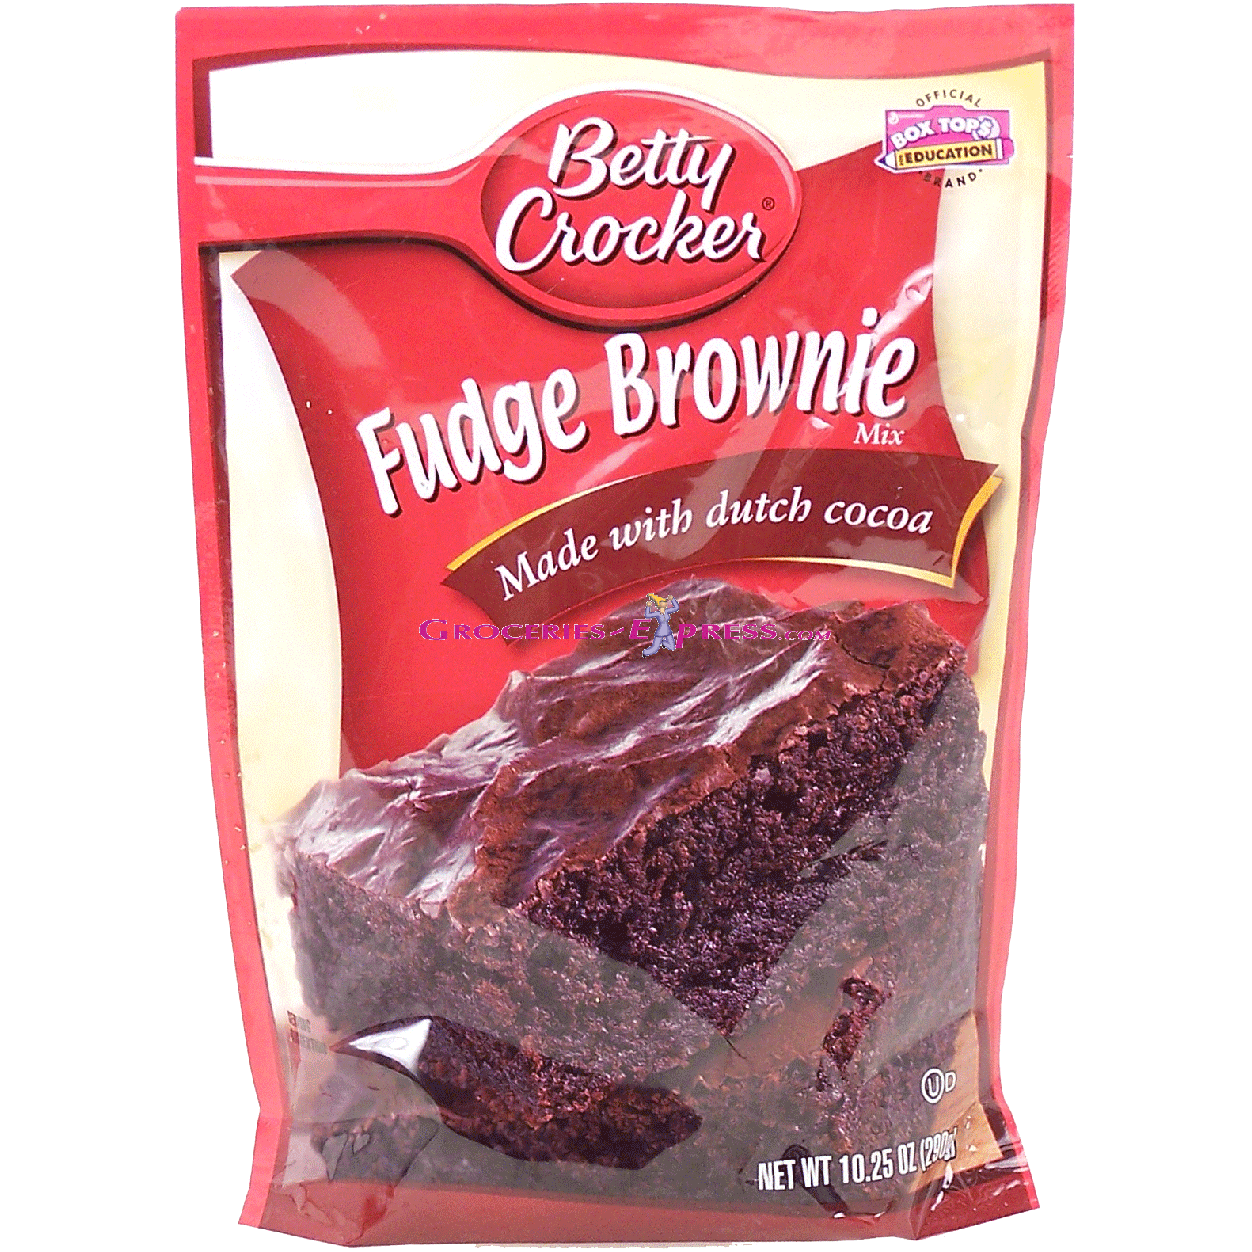 How To Make: Betty Crocker Fudge Brownie Mix 